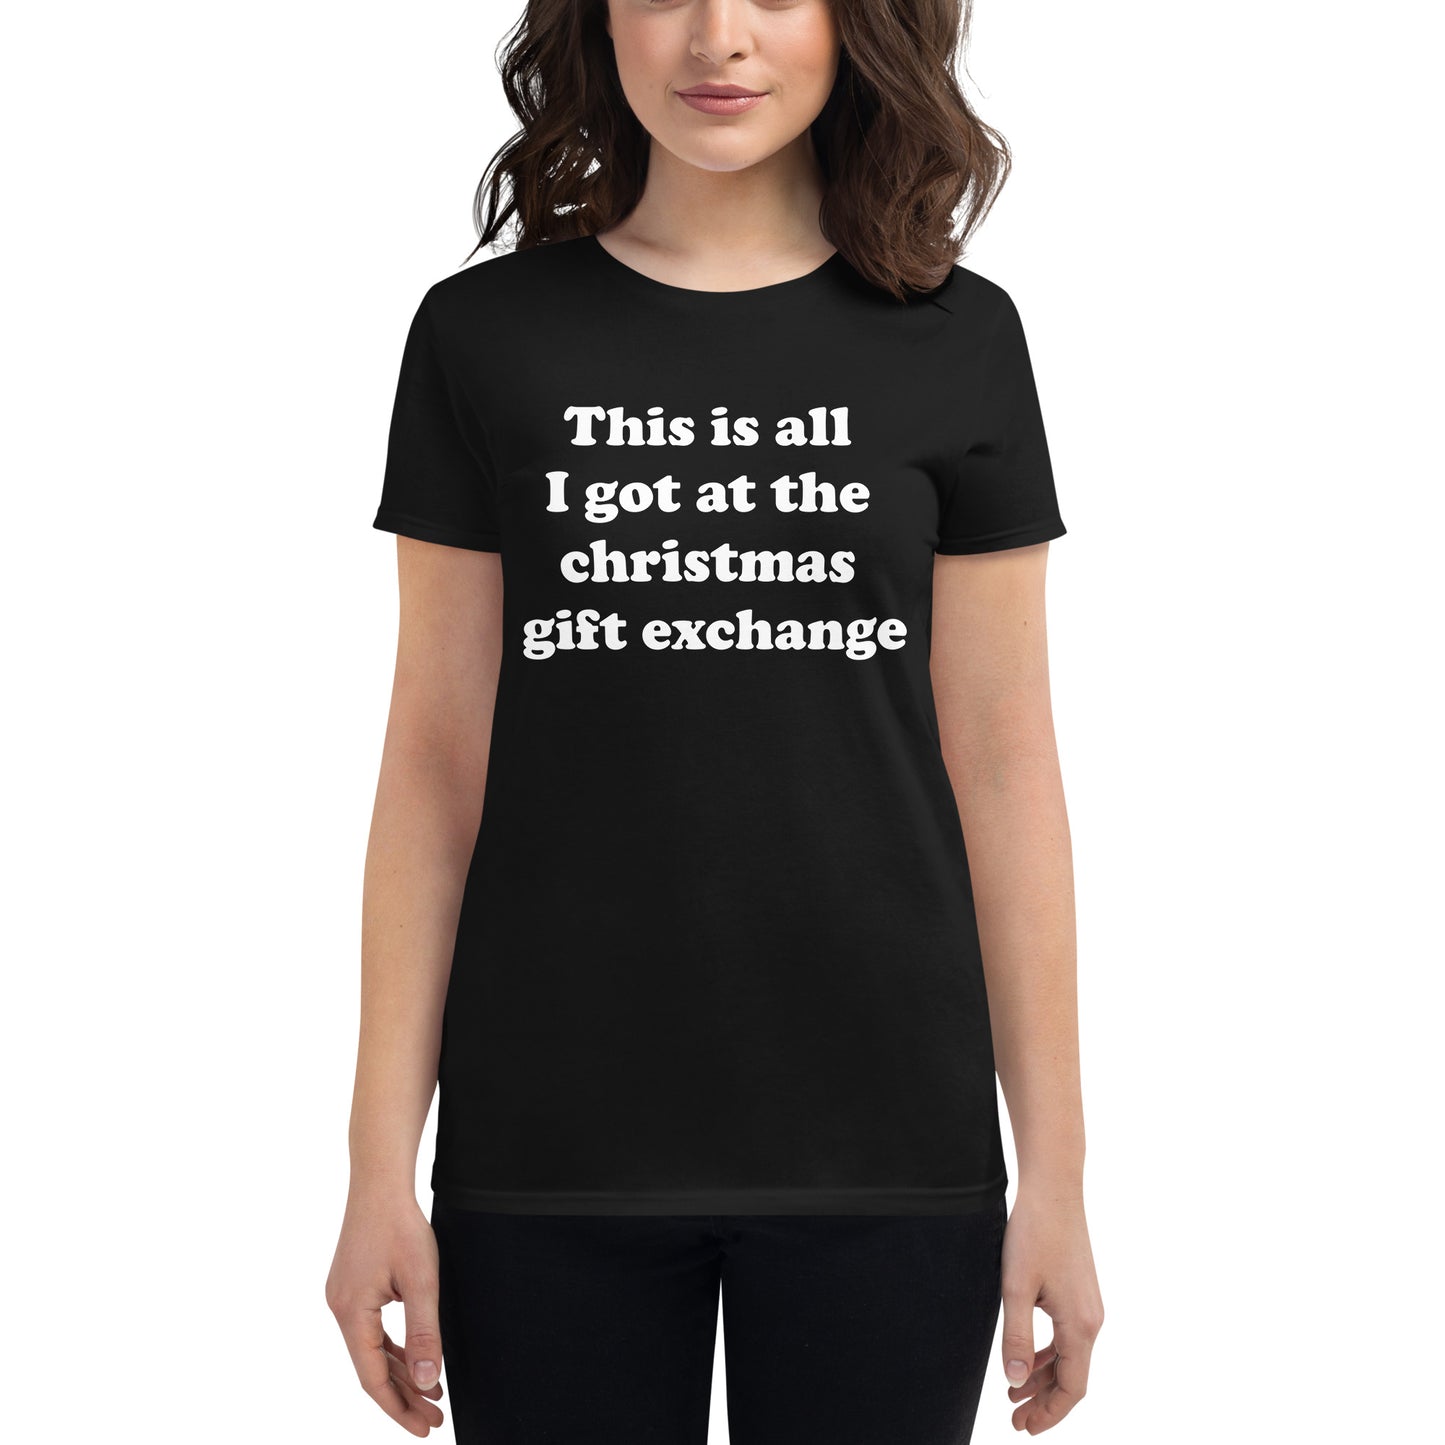 Gift exchange women's T-shirt